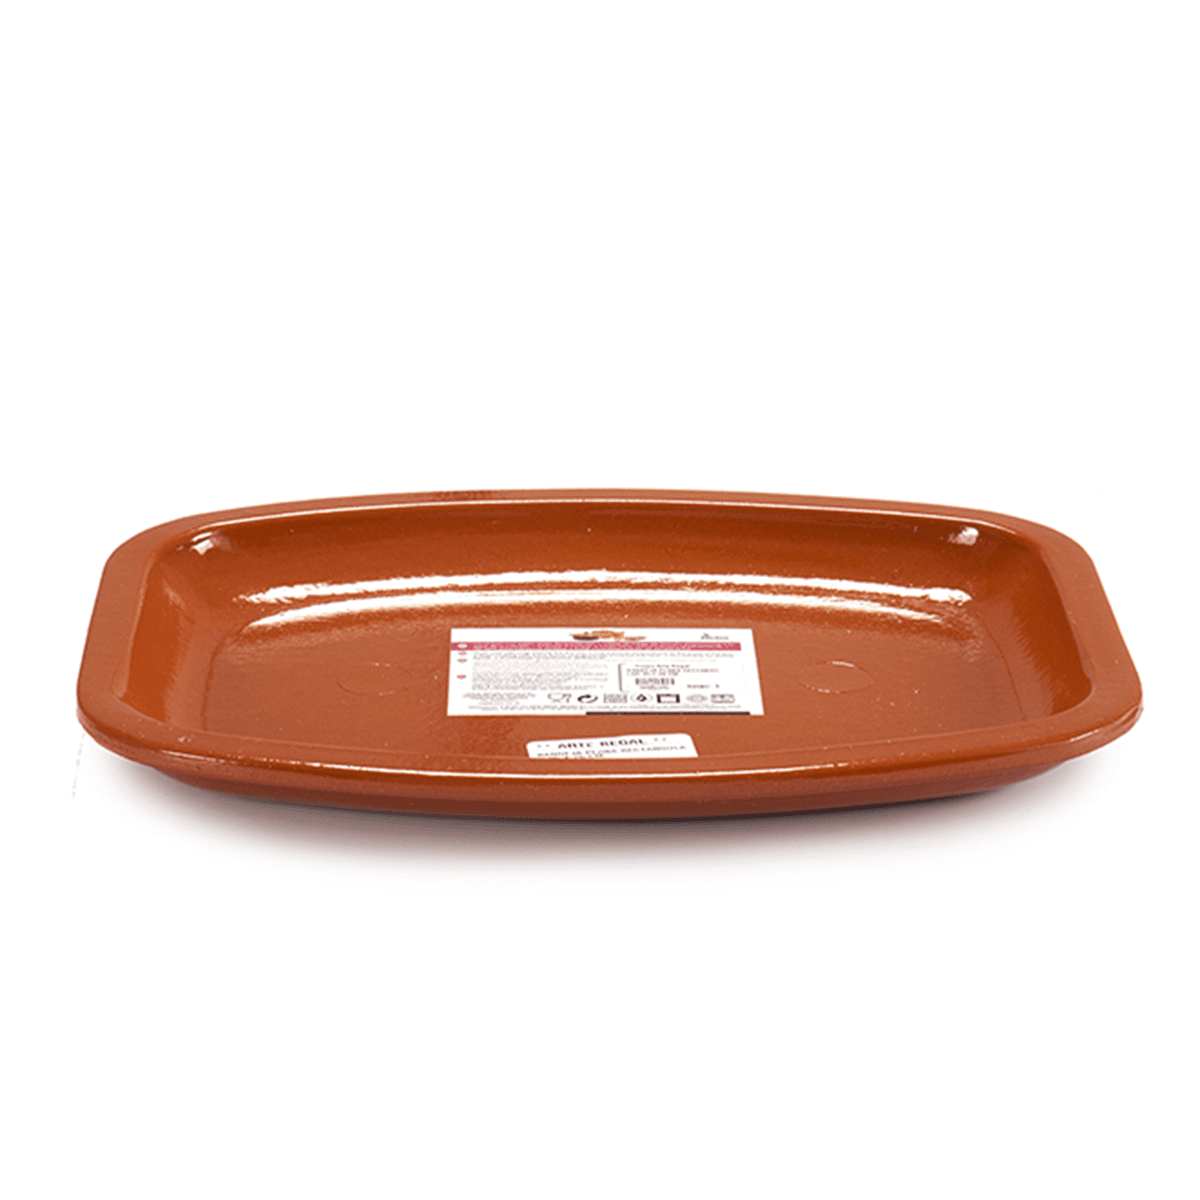 صحن مستطيل كبير مسطح فخار 30 سم صناعة اسبانيا بني آرت ريجال Arte Regal Brown Clay Flat Rectangular Plate